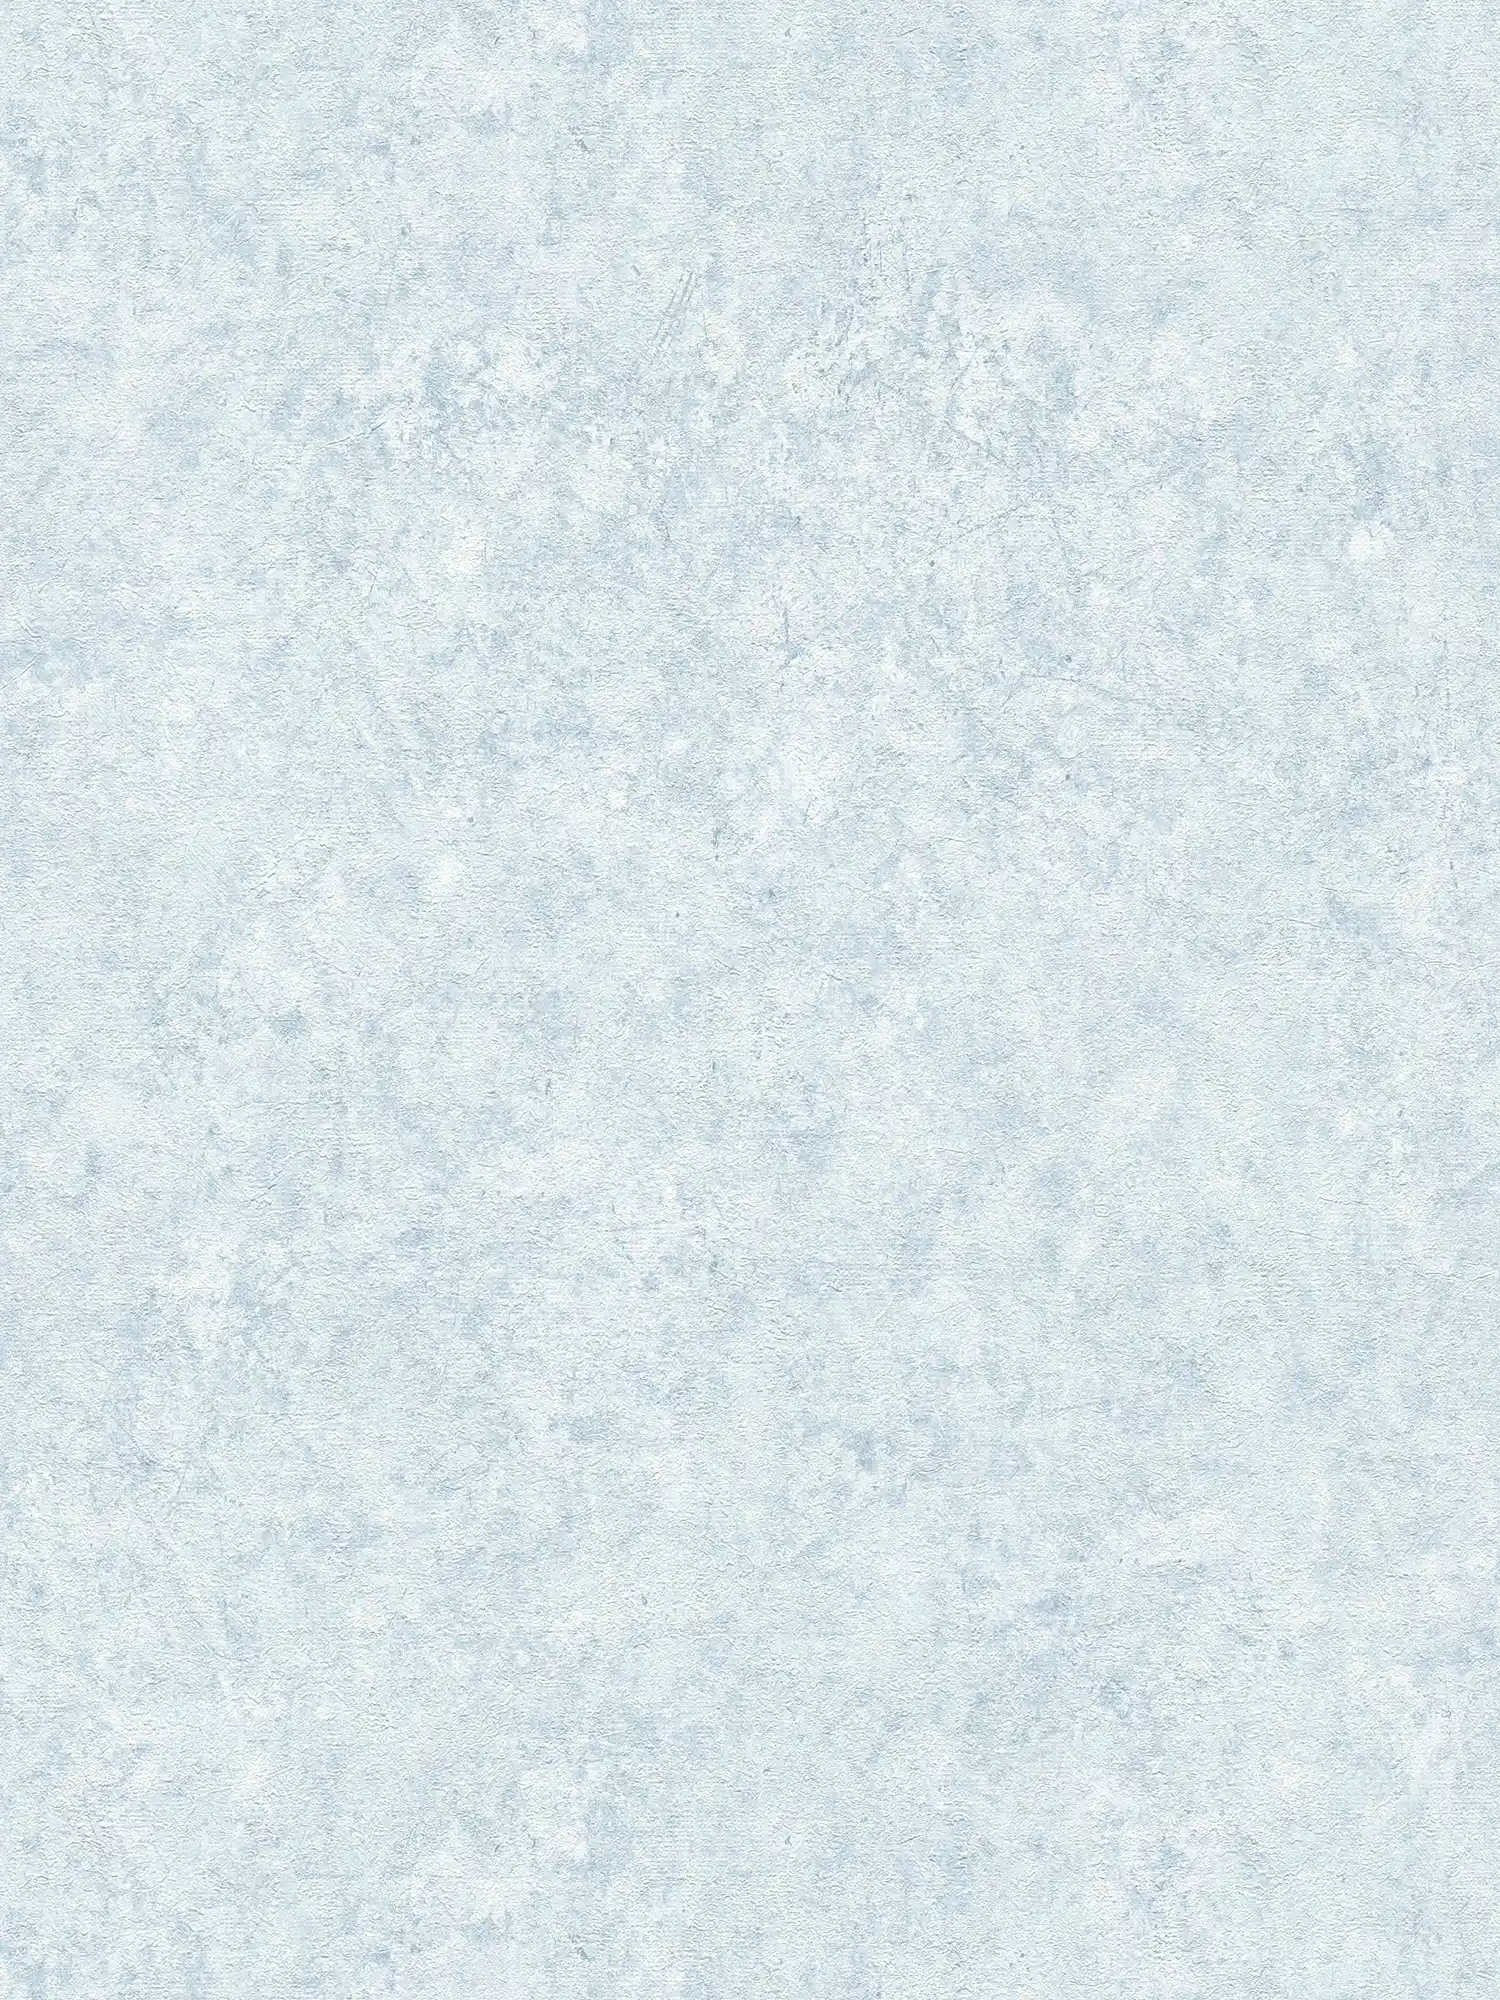 Papel pintado de textura lisa en un color sutil: azul, blanco
